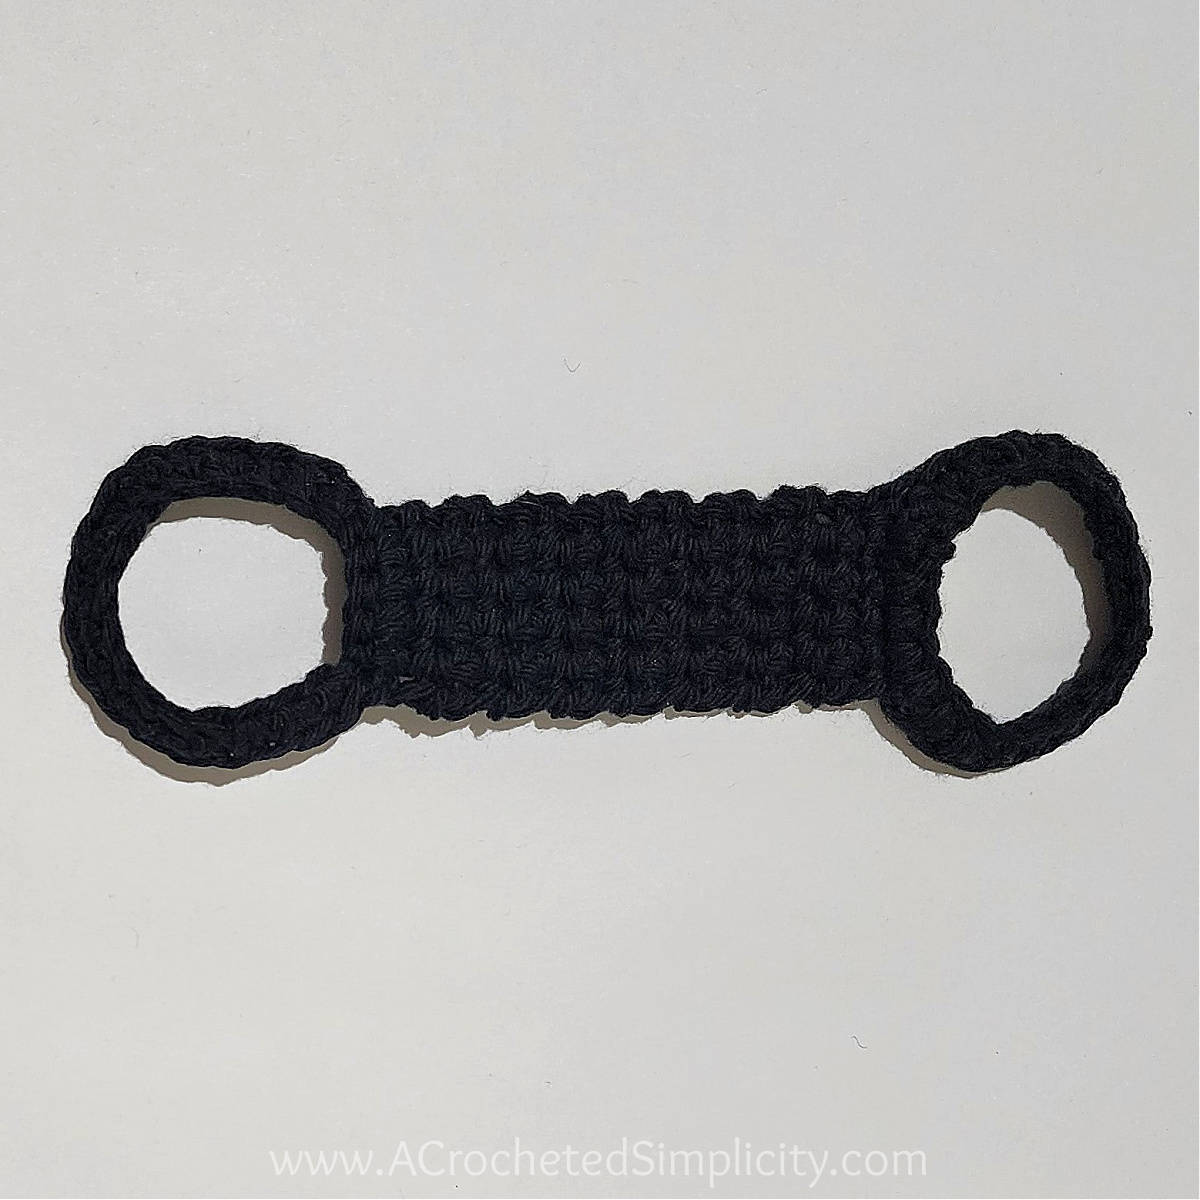 Crochet kitchen towel holder in black yarn